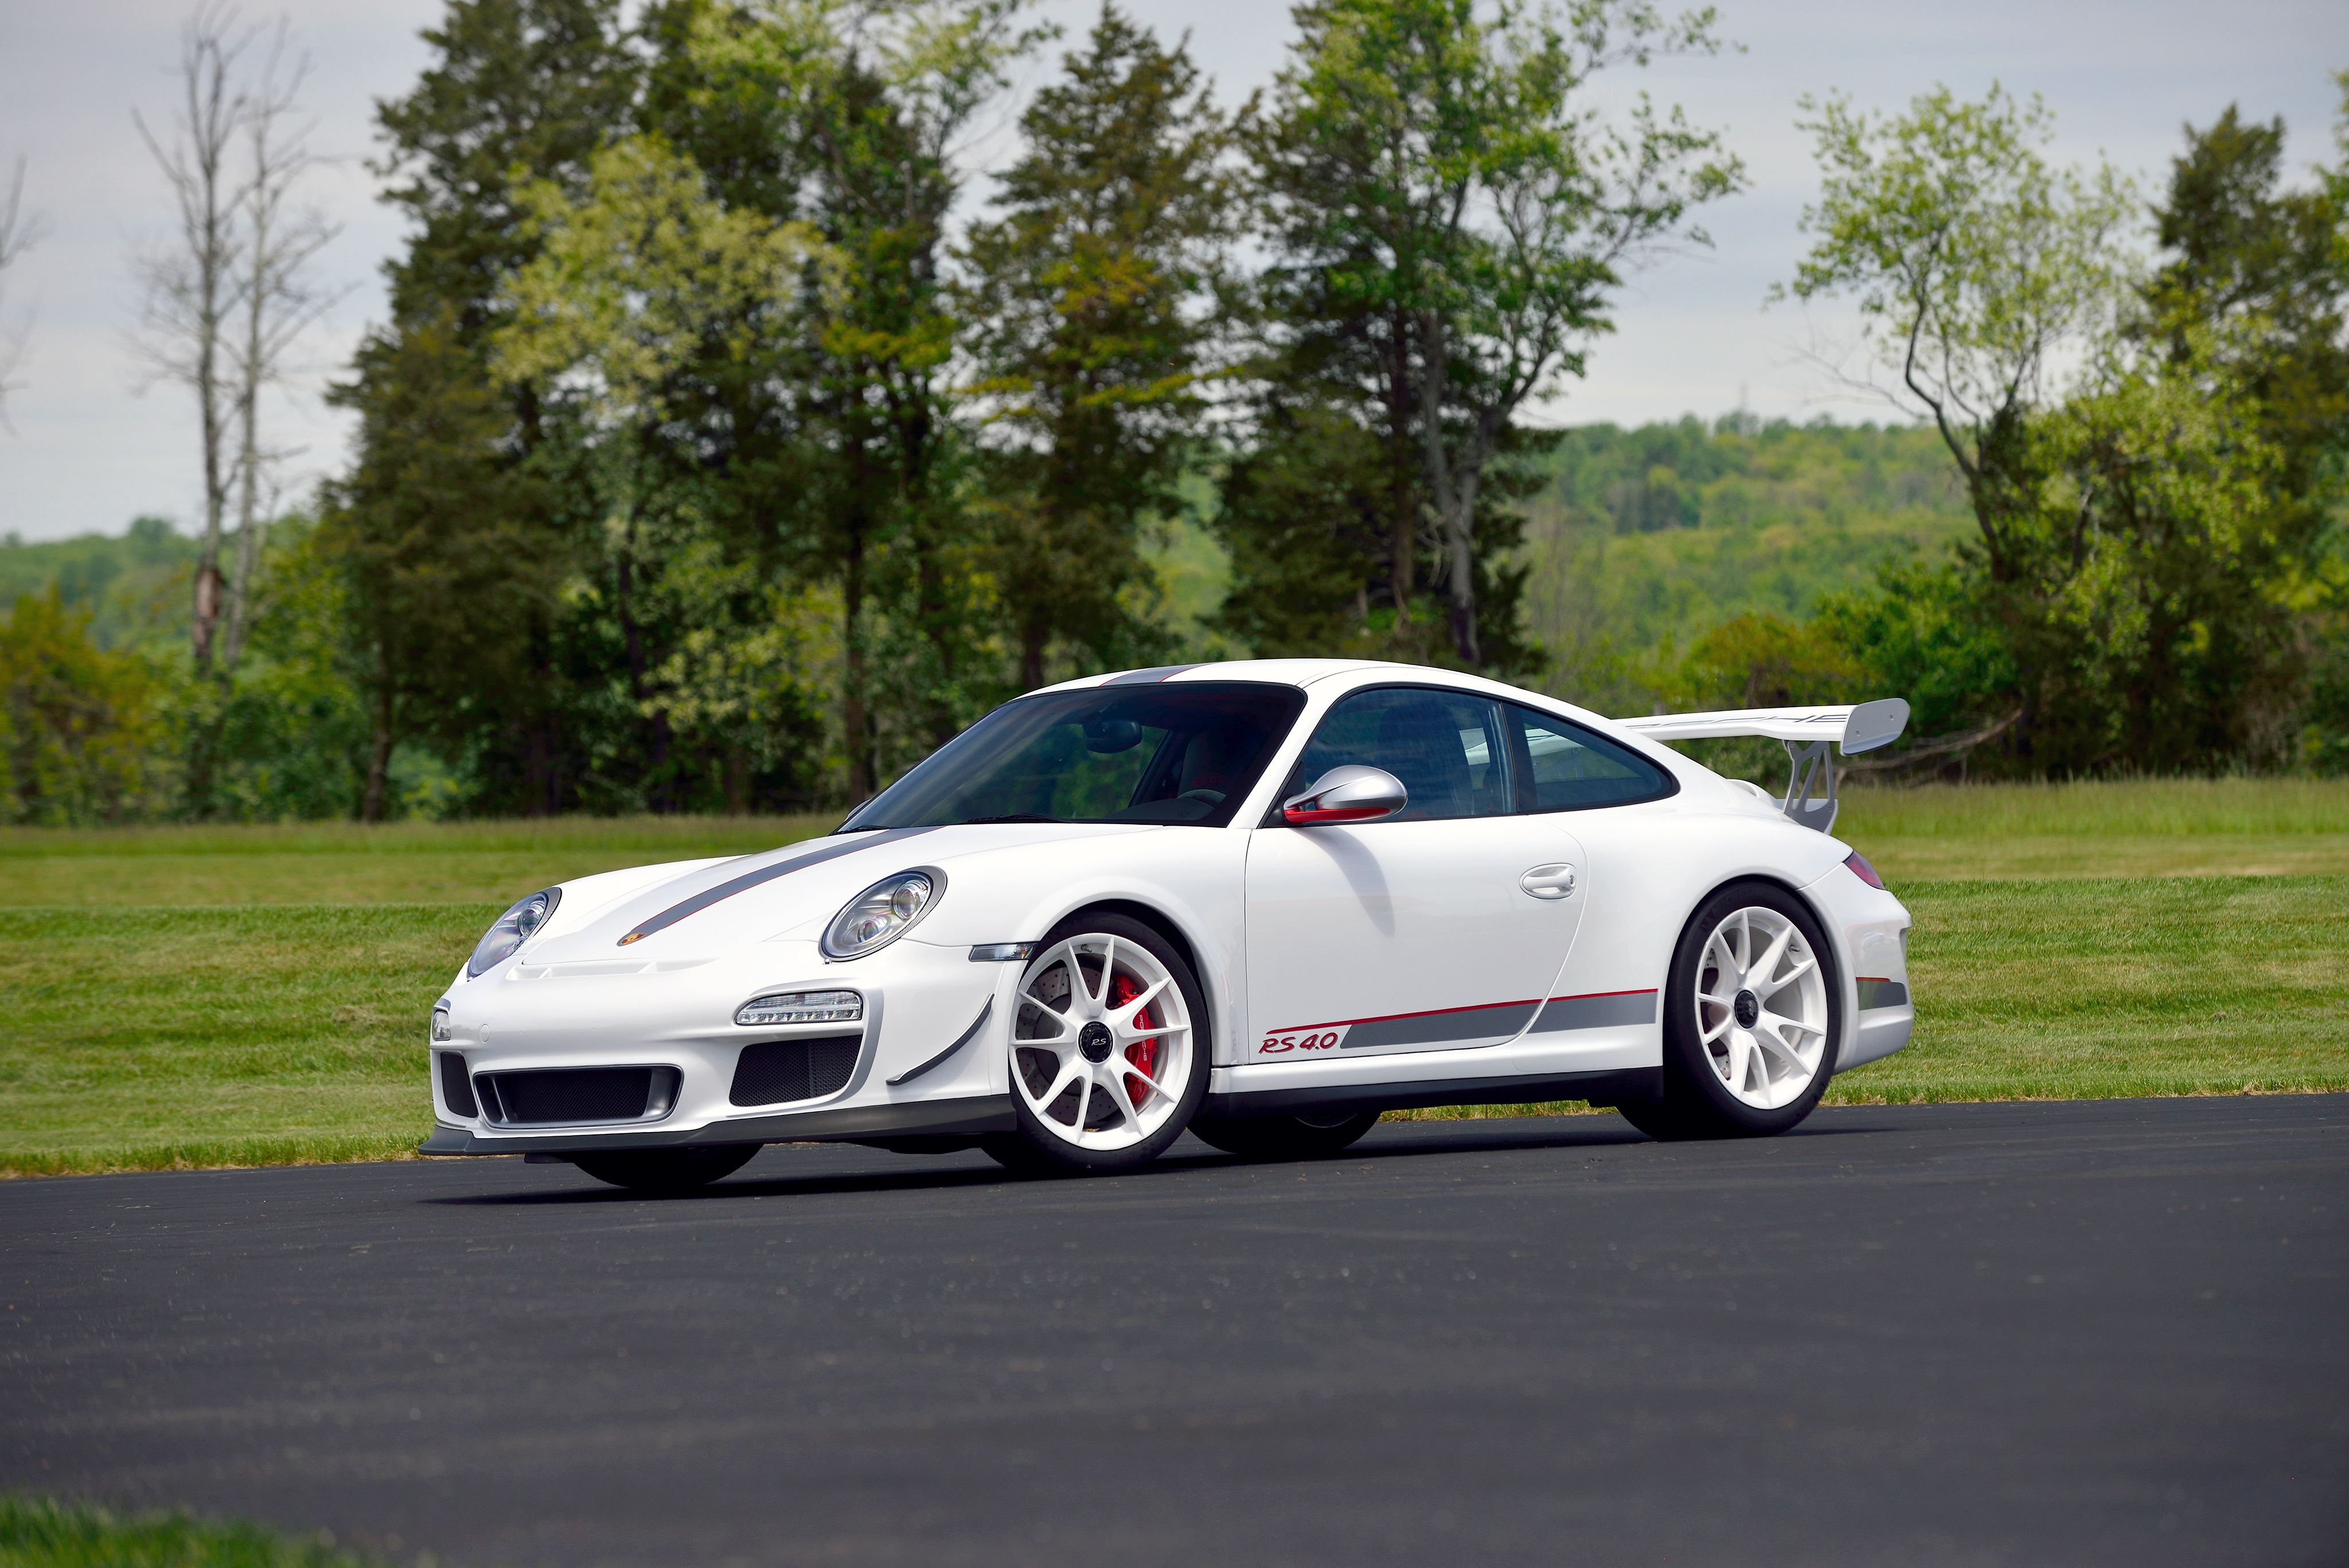 Porsche 911 Gt3  desktop Images